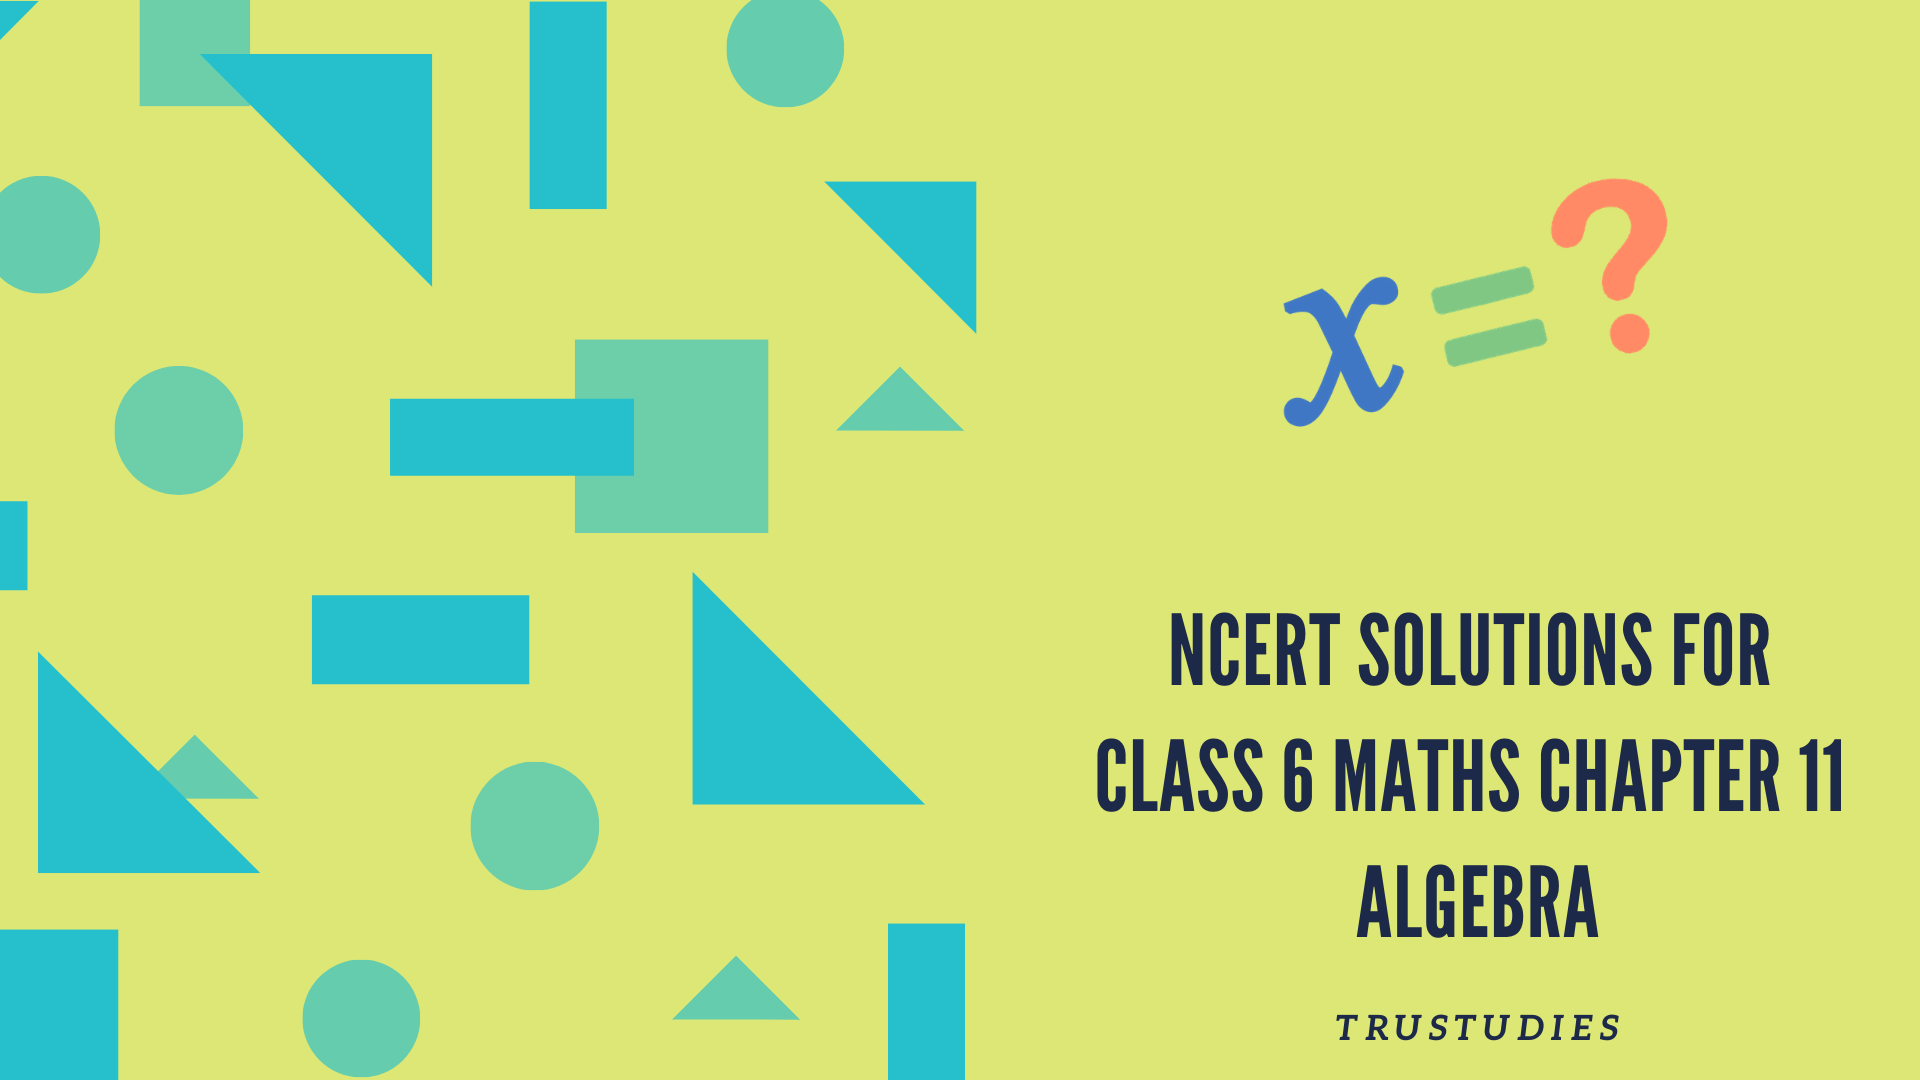 NCERT solutions for class 6 maths chapter 11 algebra banner image